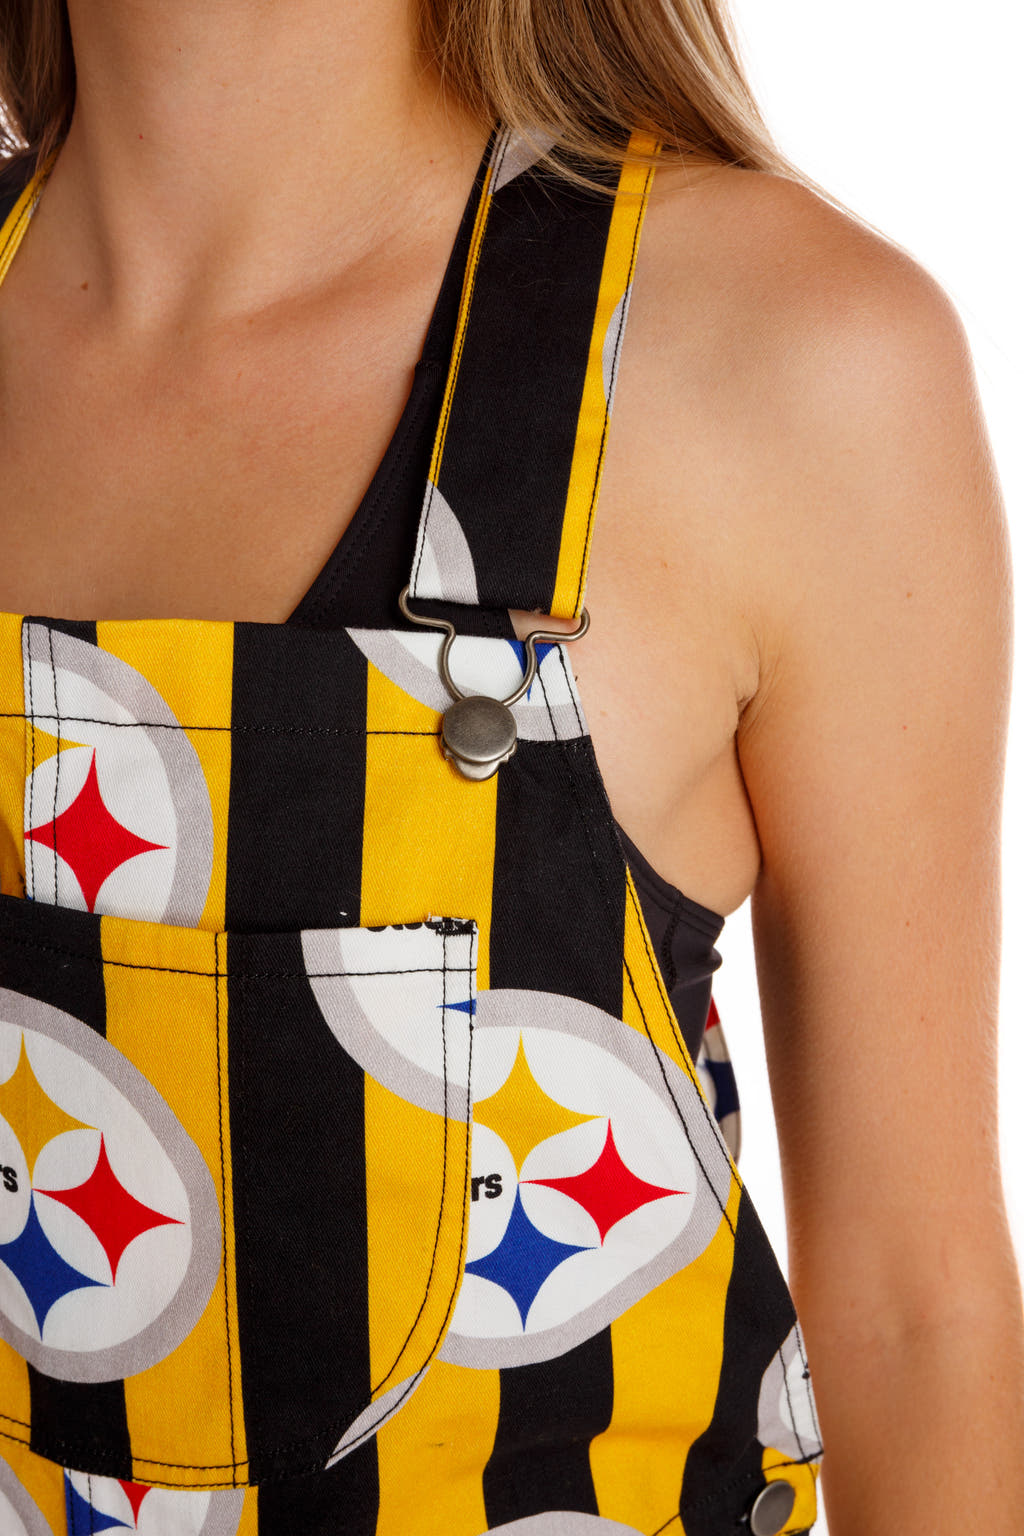 Pittsburgh Steelers Ladies Overalls